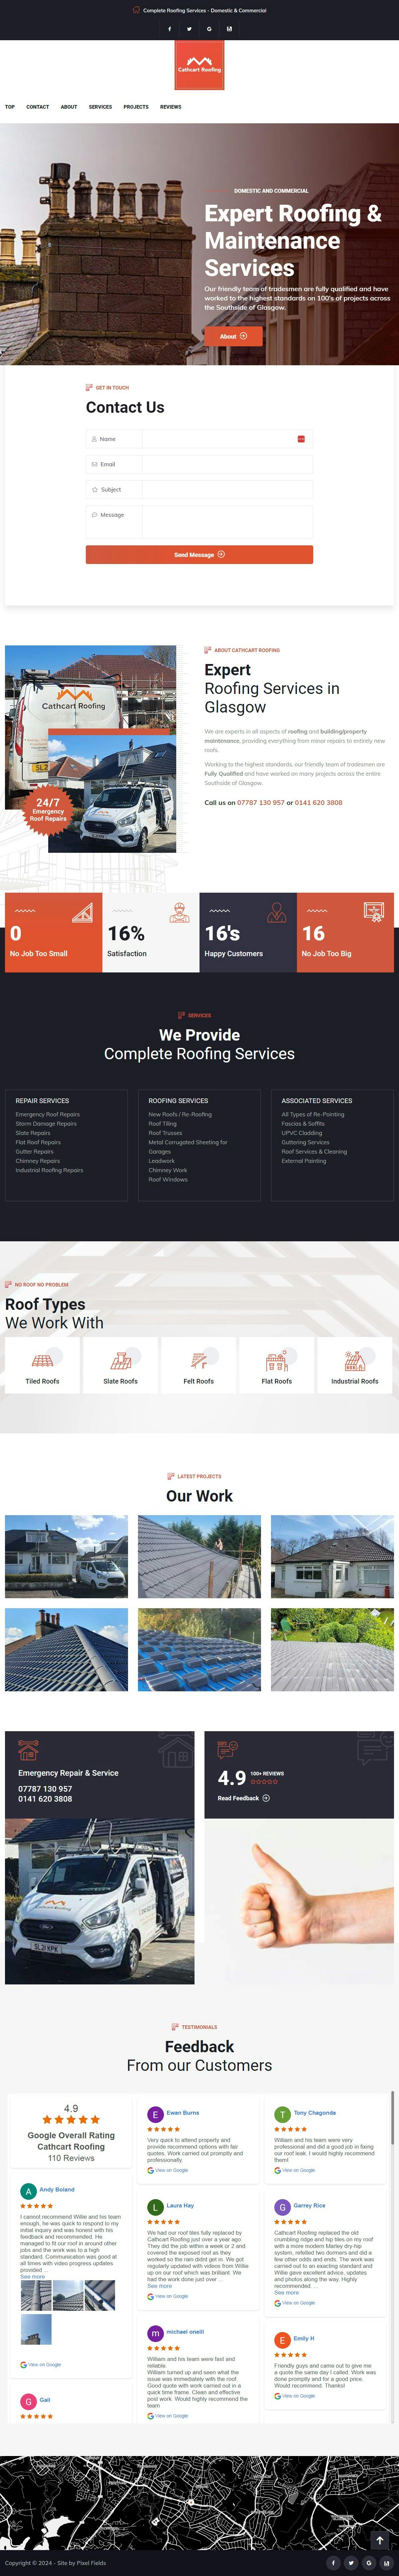 Cathcart Roofing Contractors, built in HTML